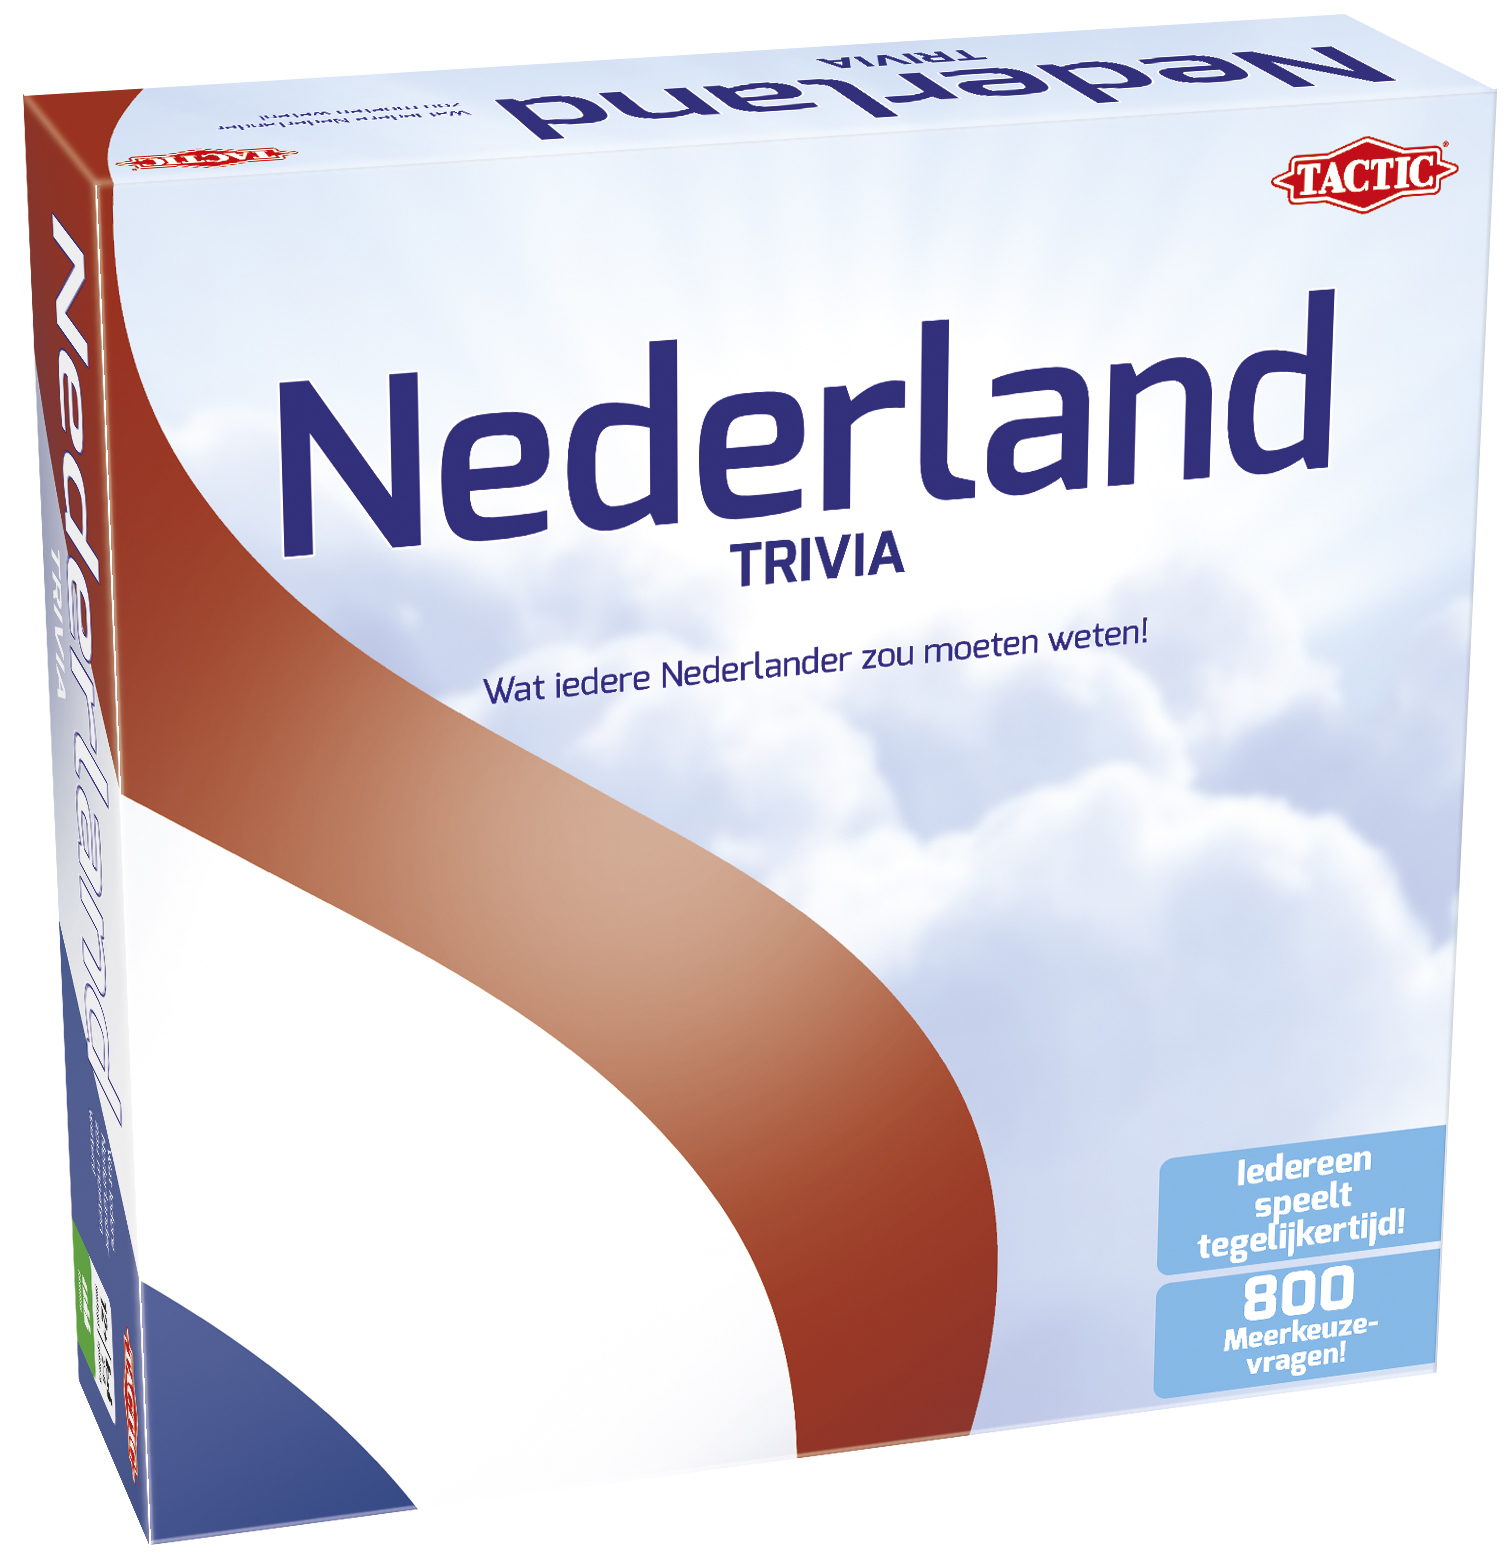 Tactic Nederland Trivia